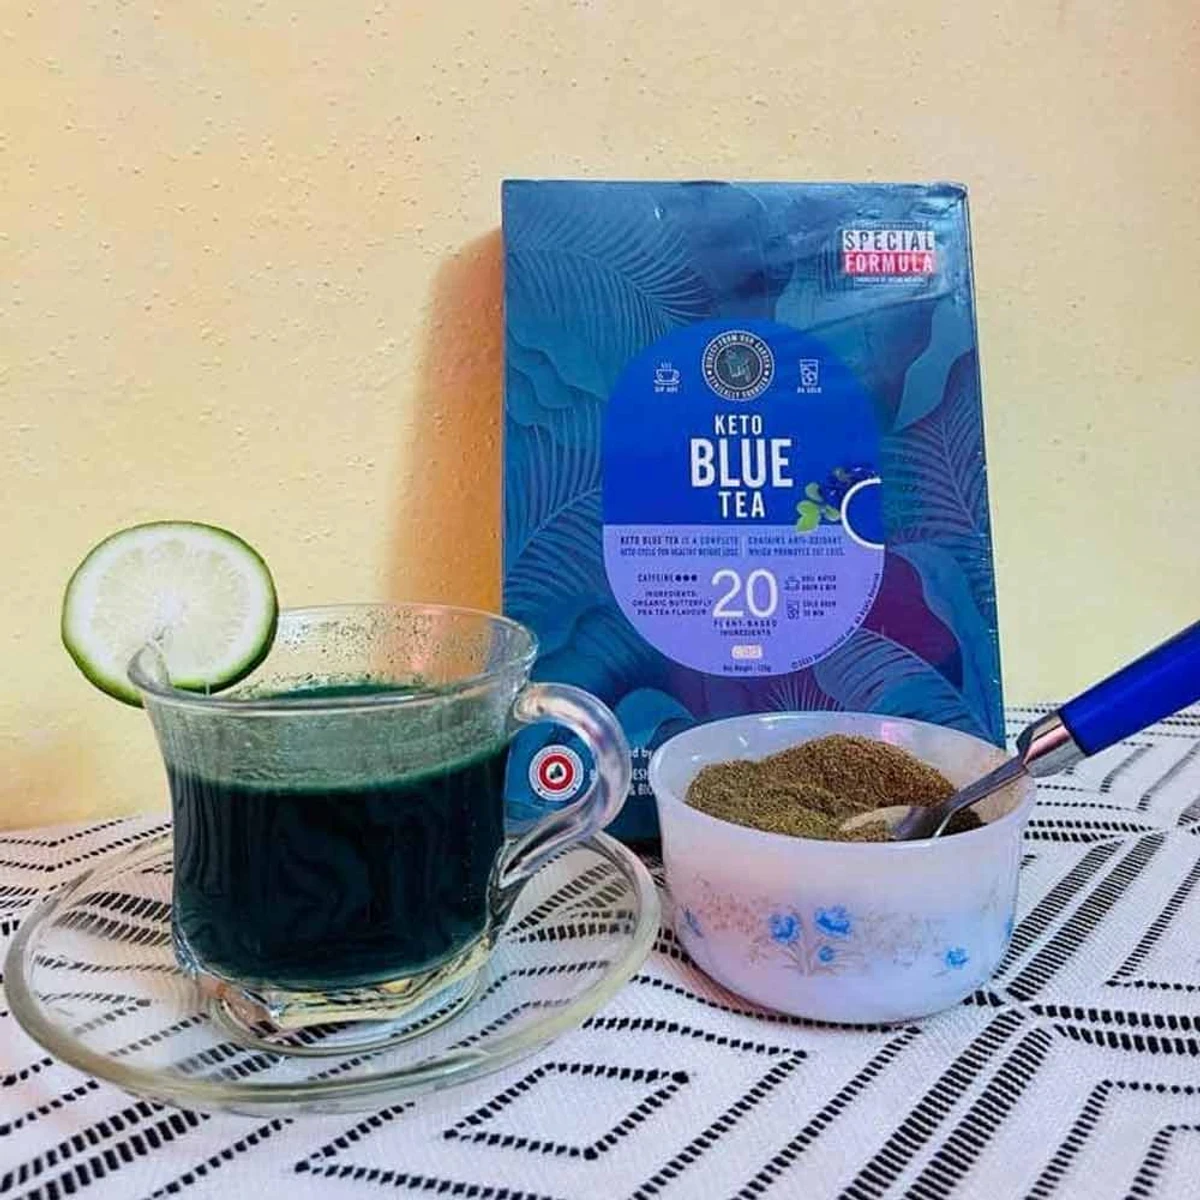 Keto Blue Tea এক মাসের কোর্স (1 packet)